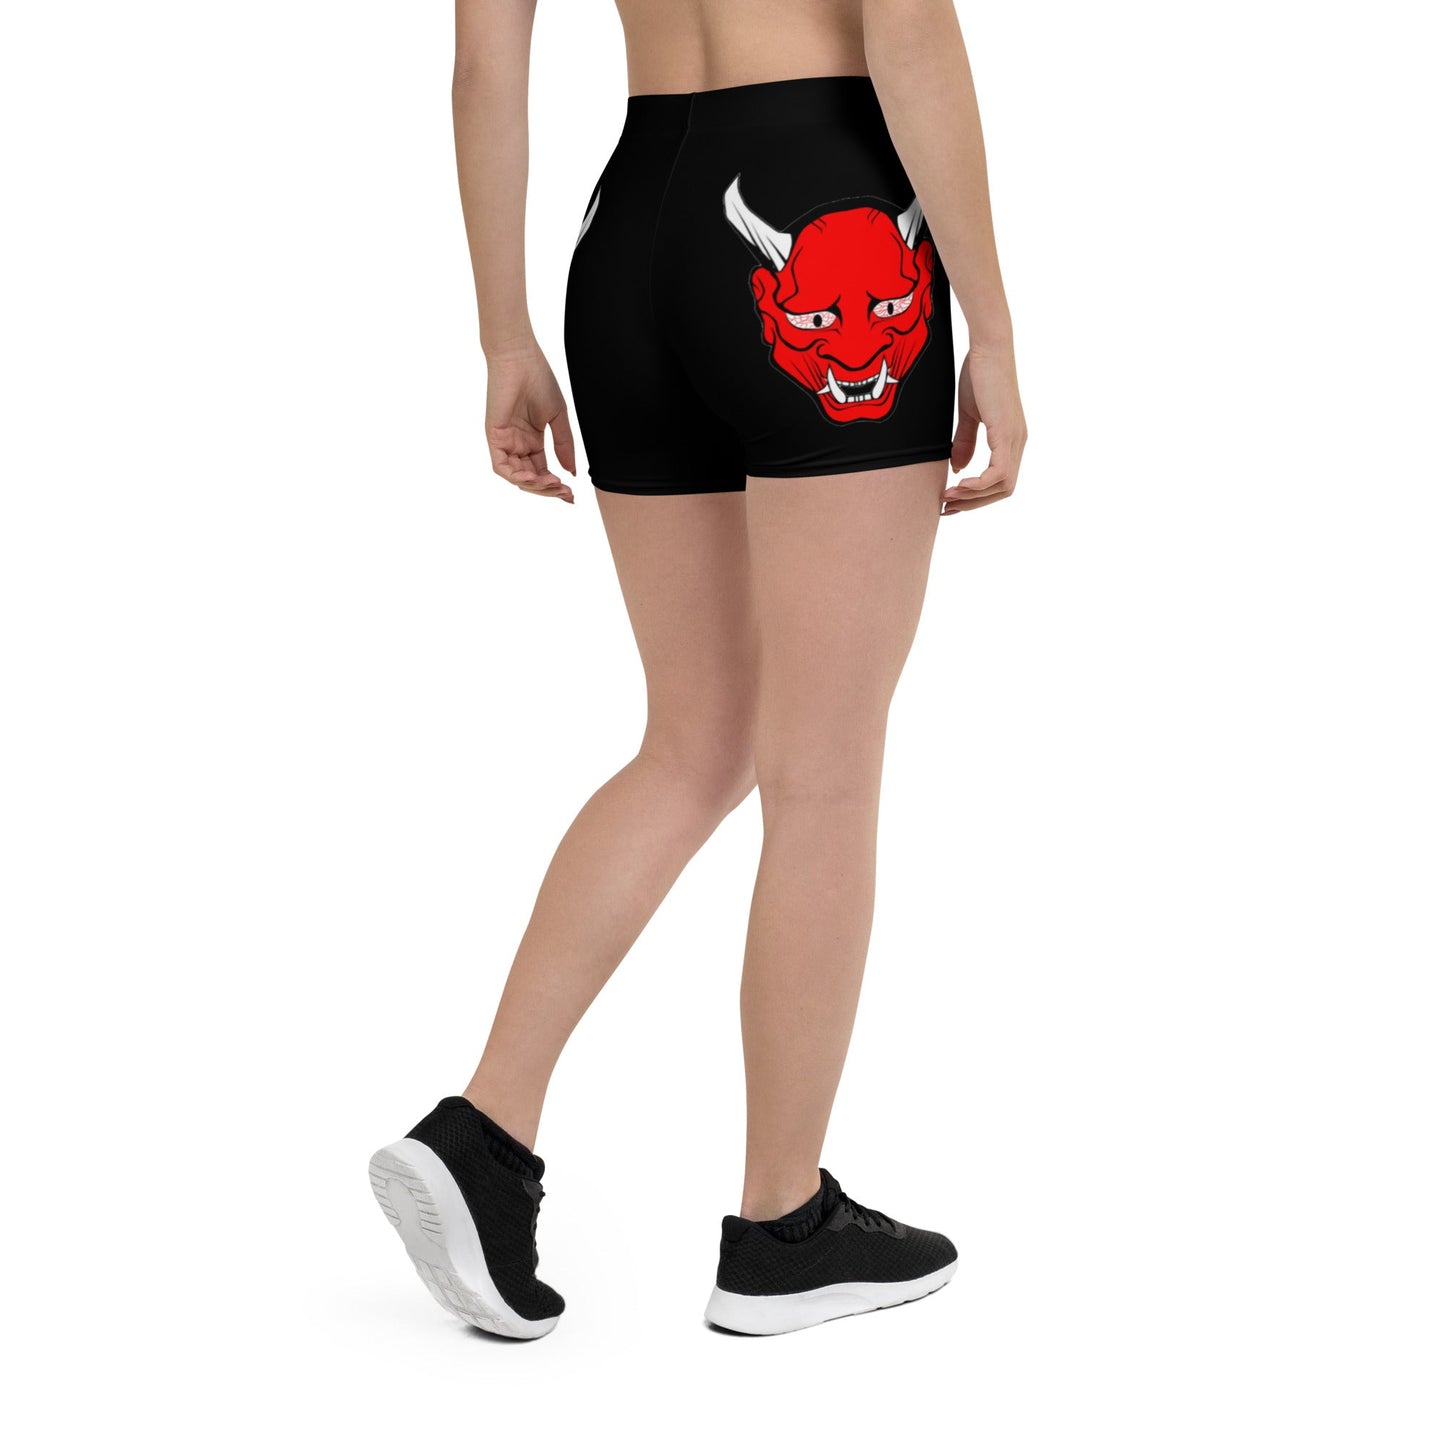 Satanic Shorts Featuring The Devil on Each Cheek / Guaranteed to Shock - Lizard Vigilante